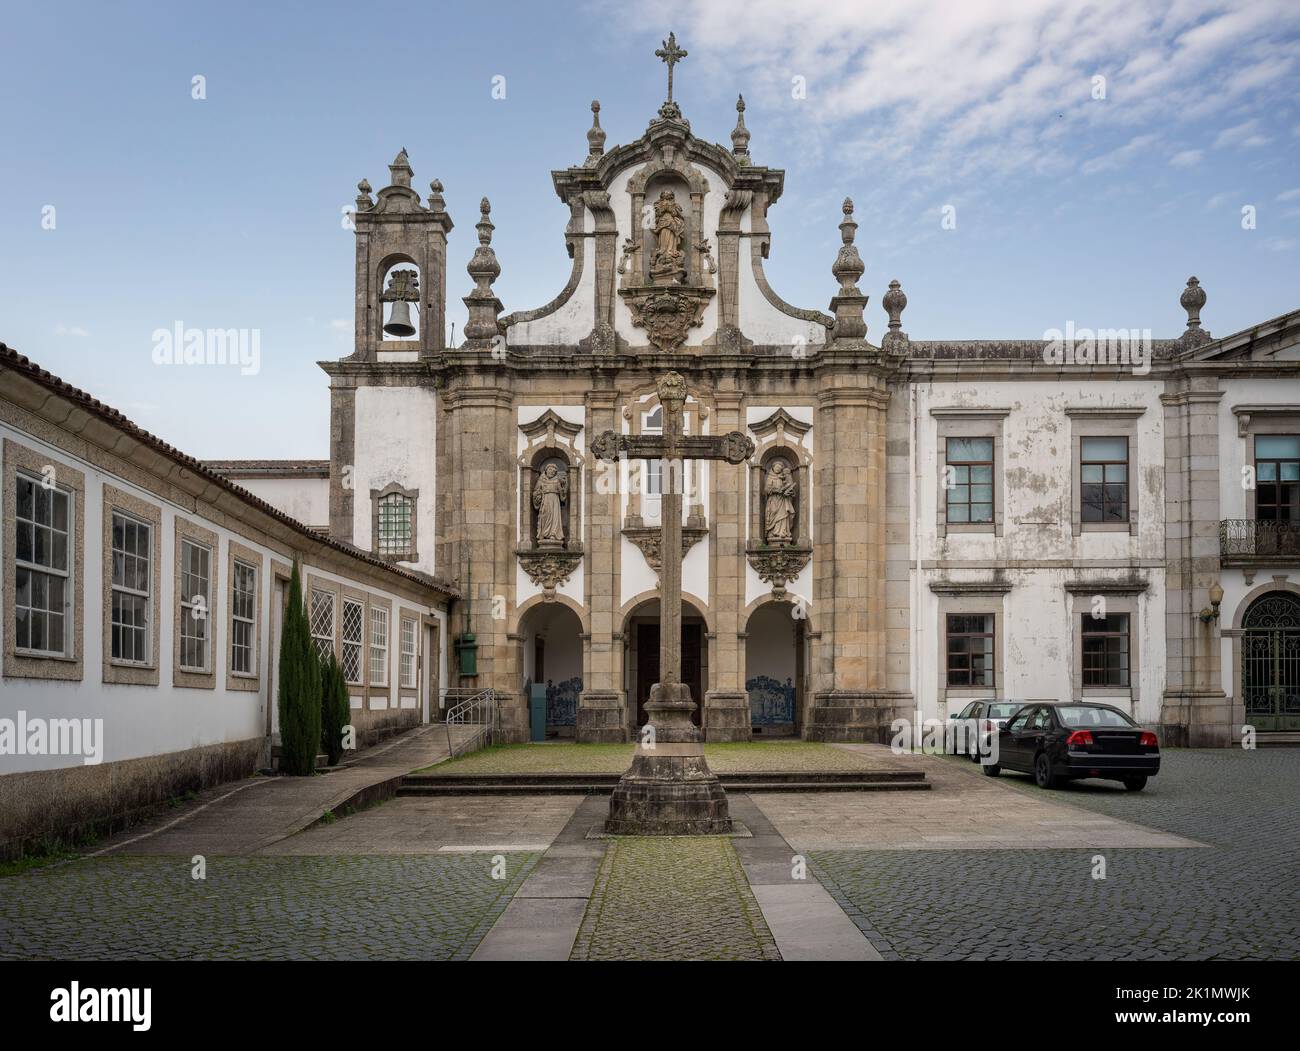 Convent of Santo Antonio dos Capuchos - Guimaraes, Portugal Stock Photo